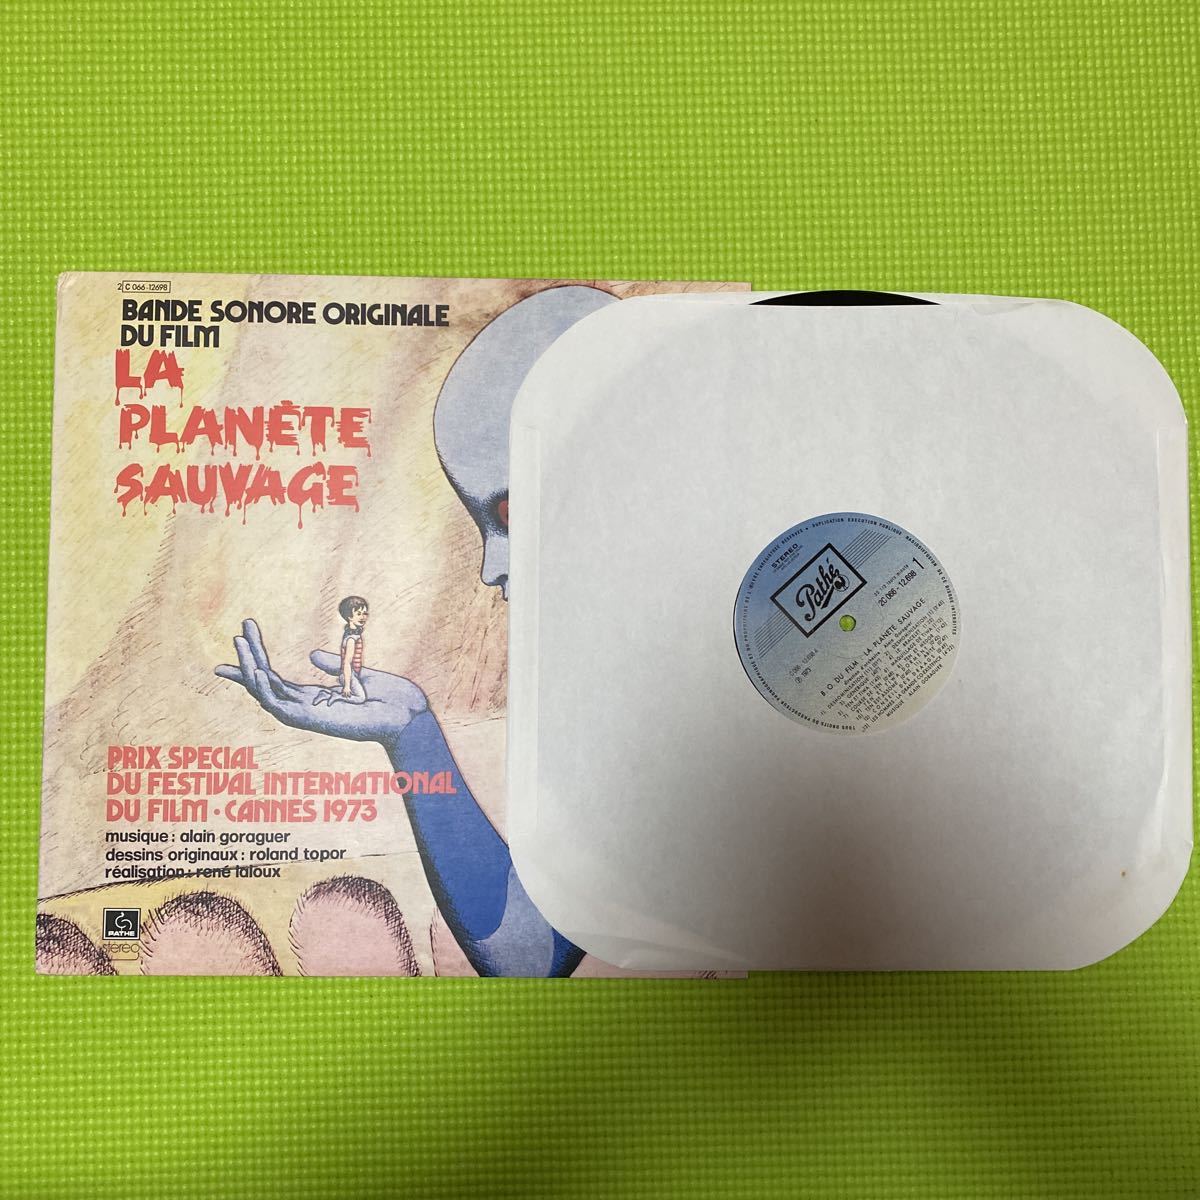 ALAIN GORAGUER LA PLANETE SAUVAGE вентилятор ta палочка planet саундтрек /lp запись vinyl музыка из фильмов 